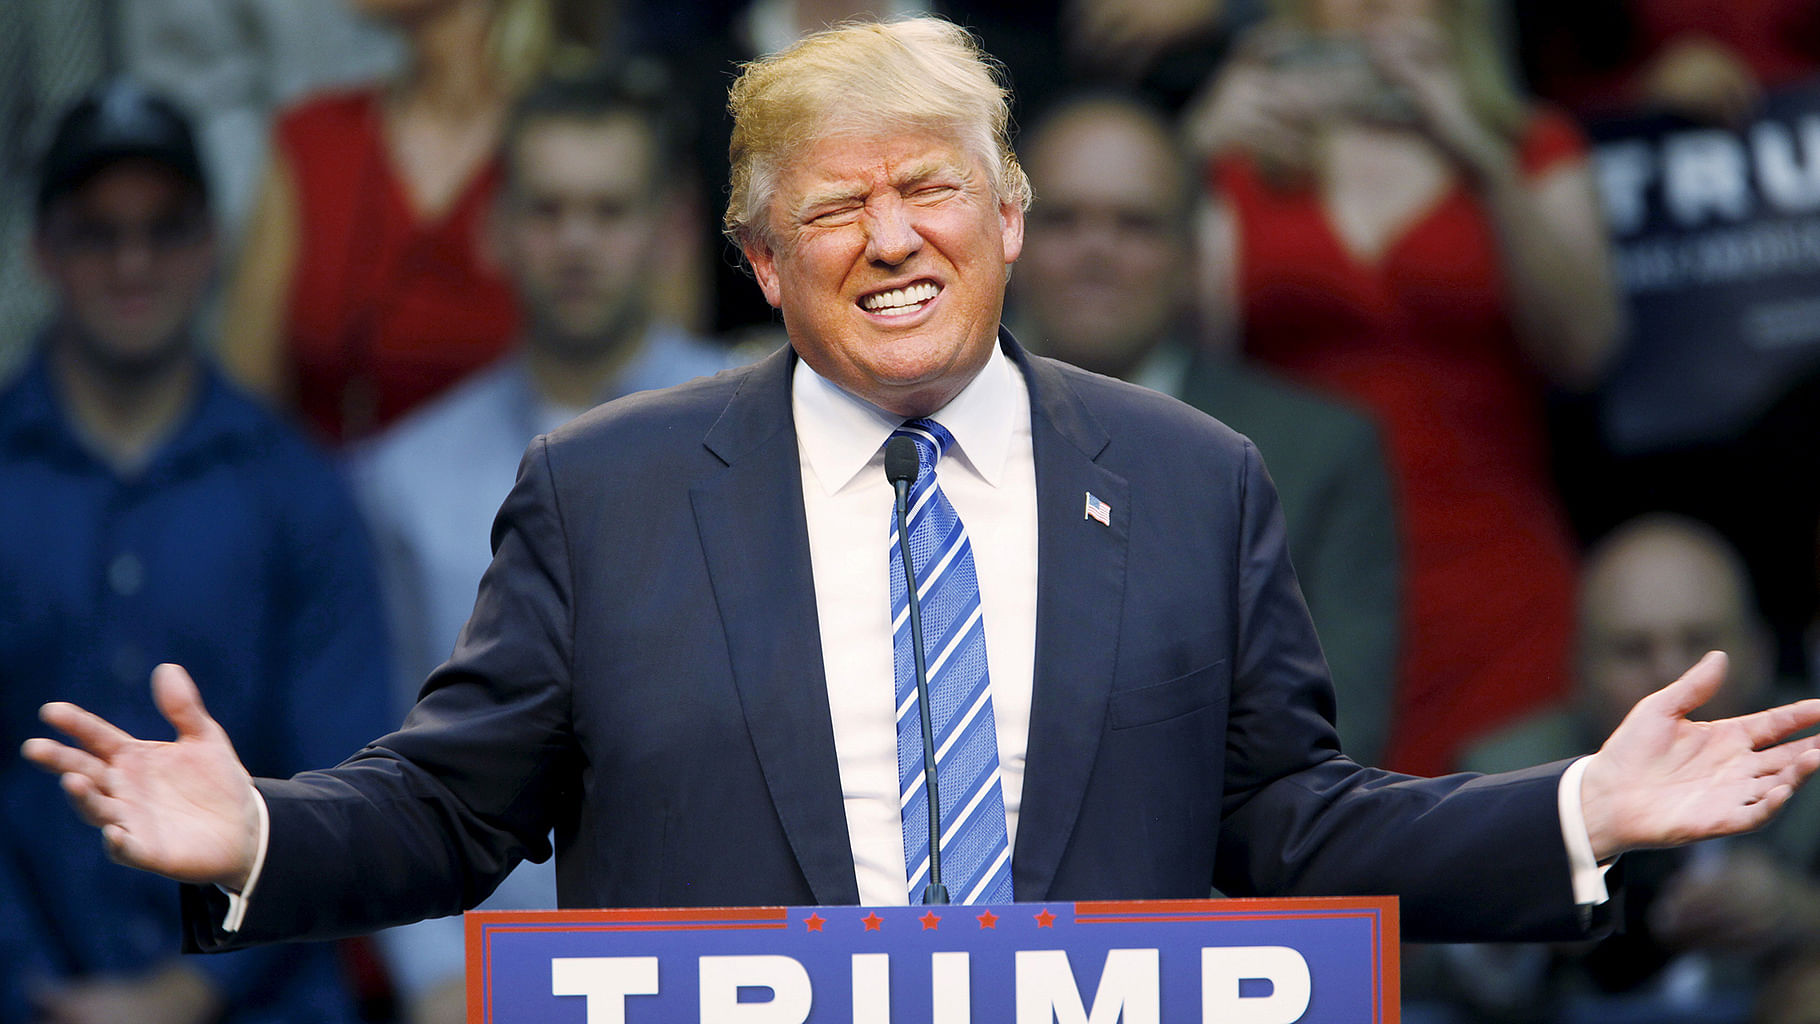 Donald Trump at an election rally. (Photo: Reuters)